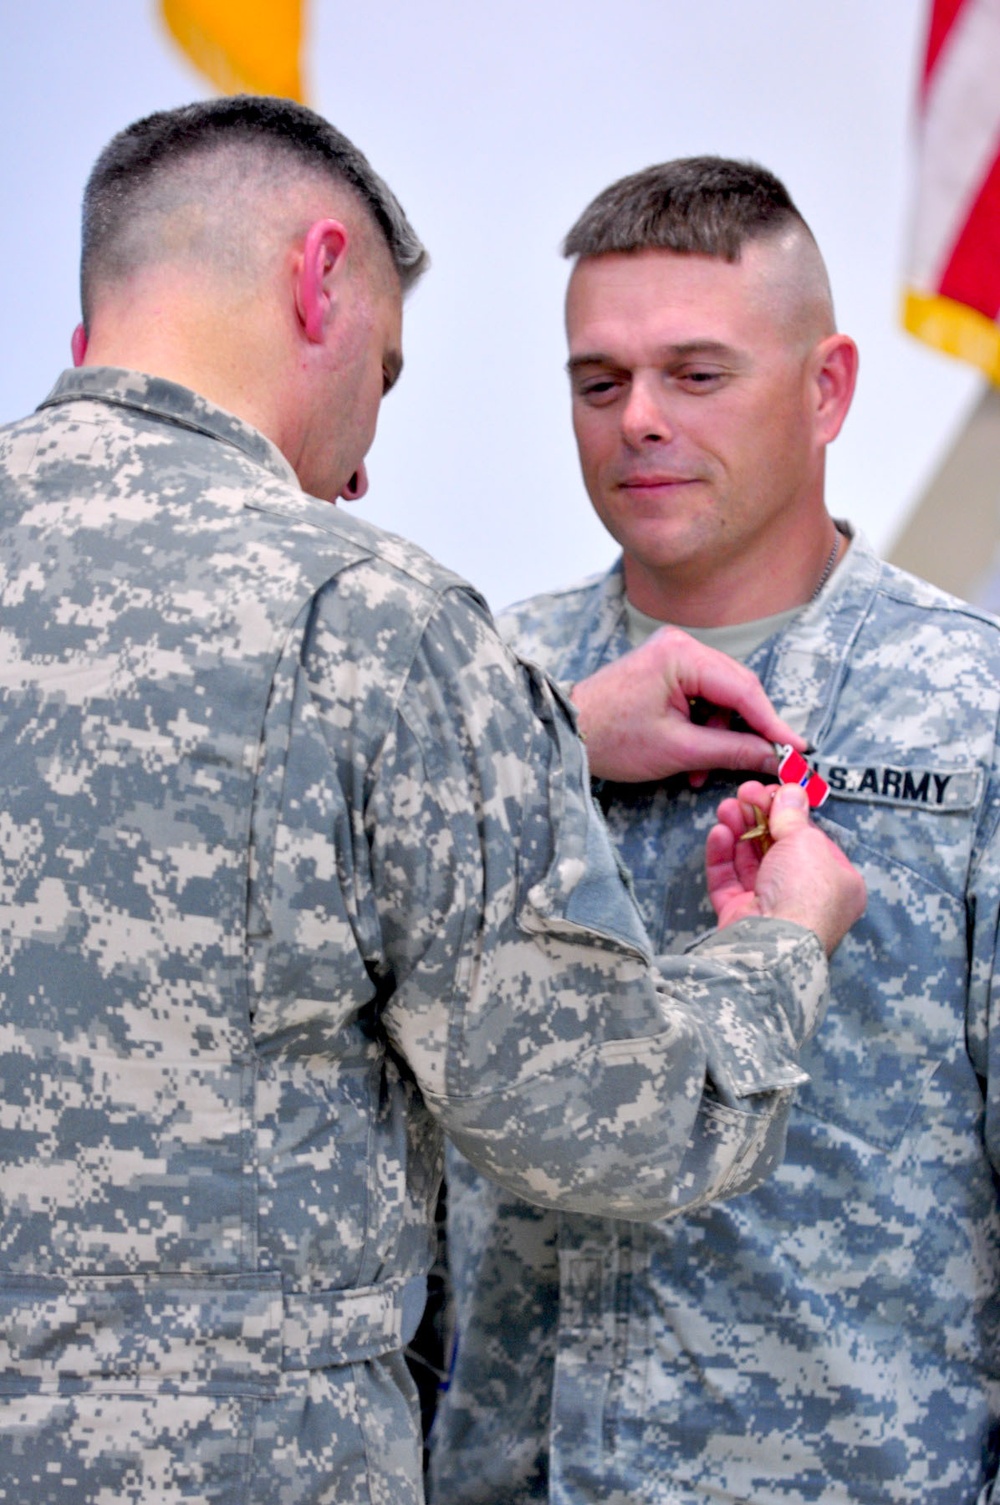 Spartan Soldier risks personal safety for brethren, earns Bronze Star